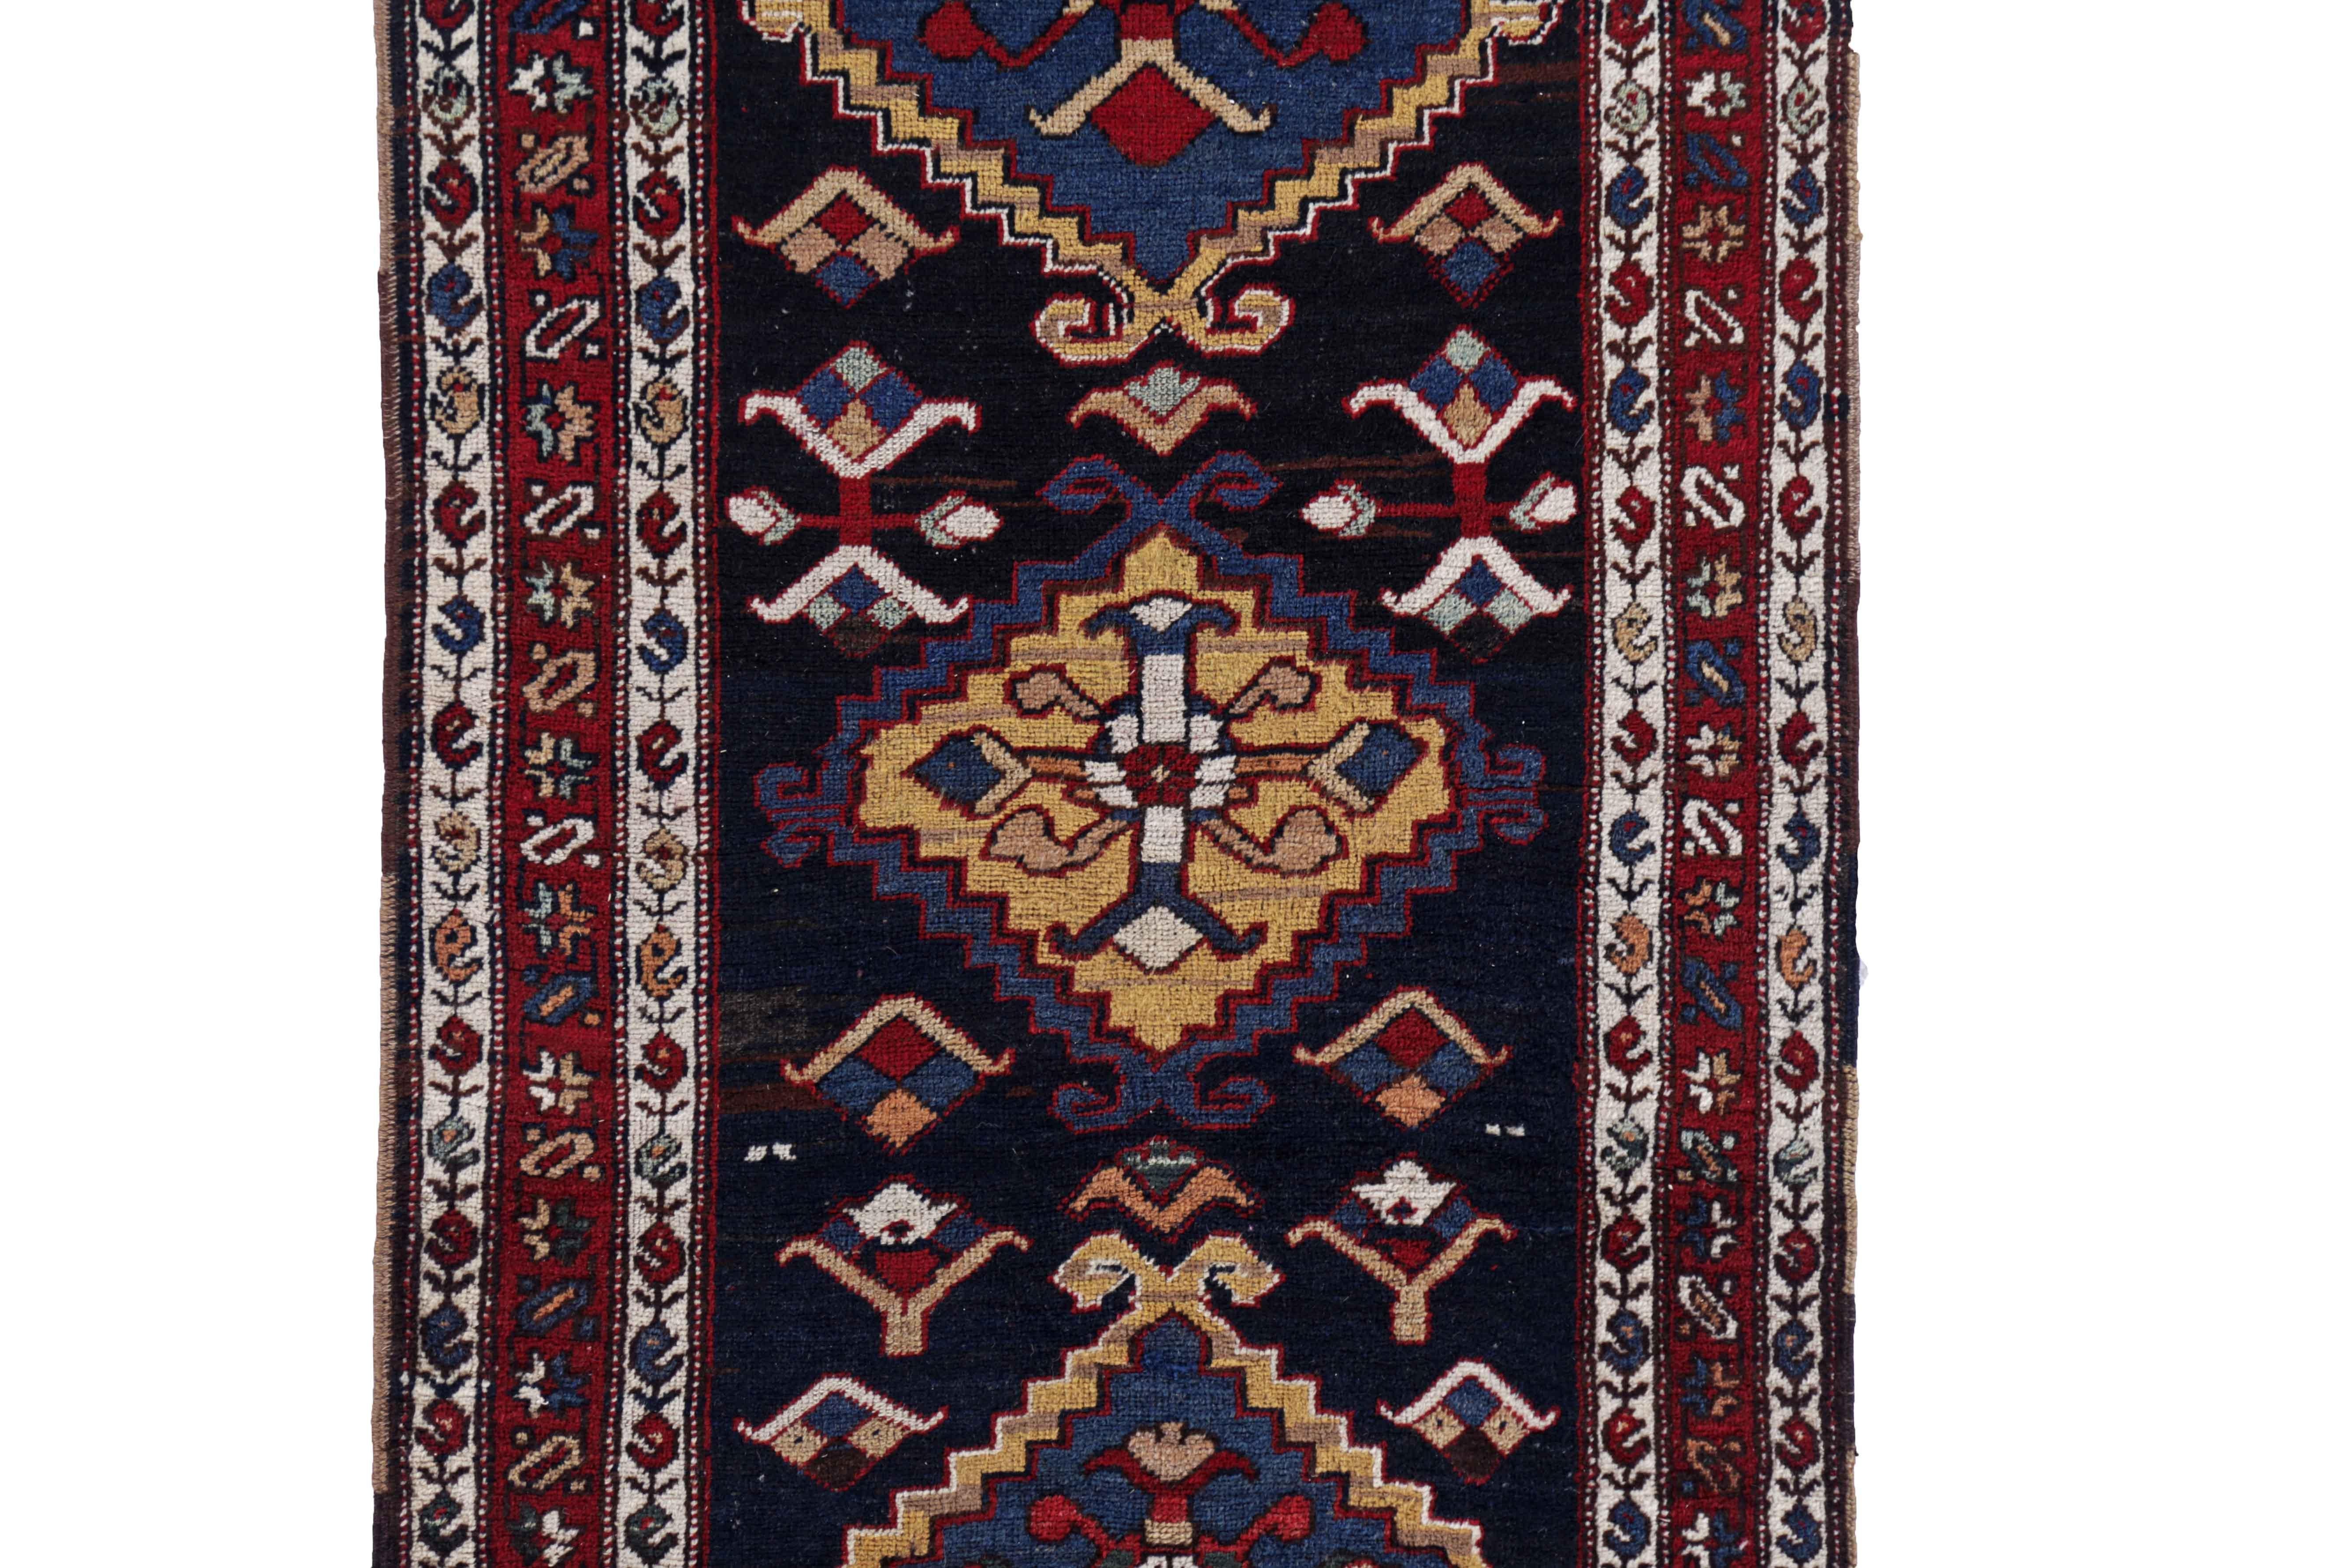 Other Antique Persian Runner Rug Azerbaijan Design For Sale